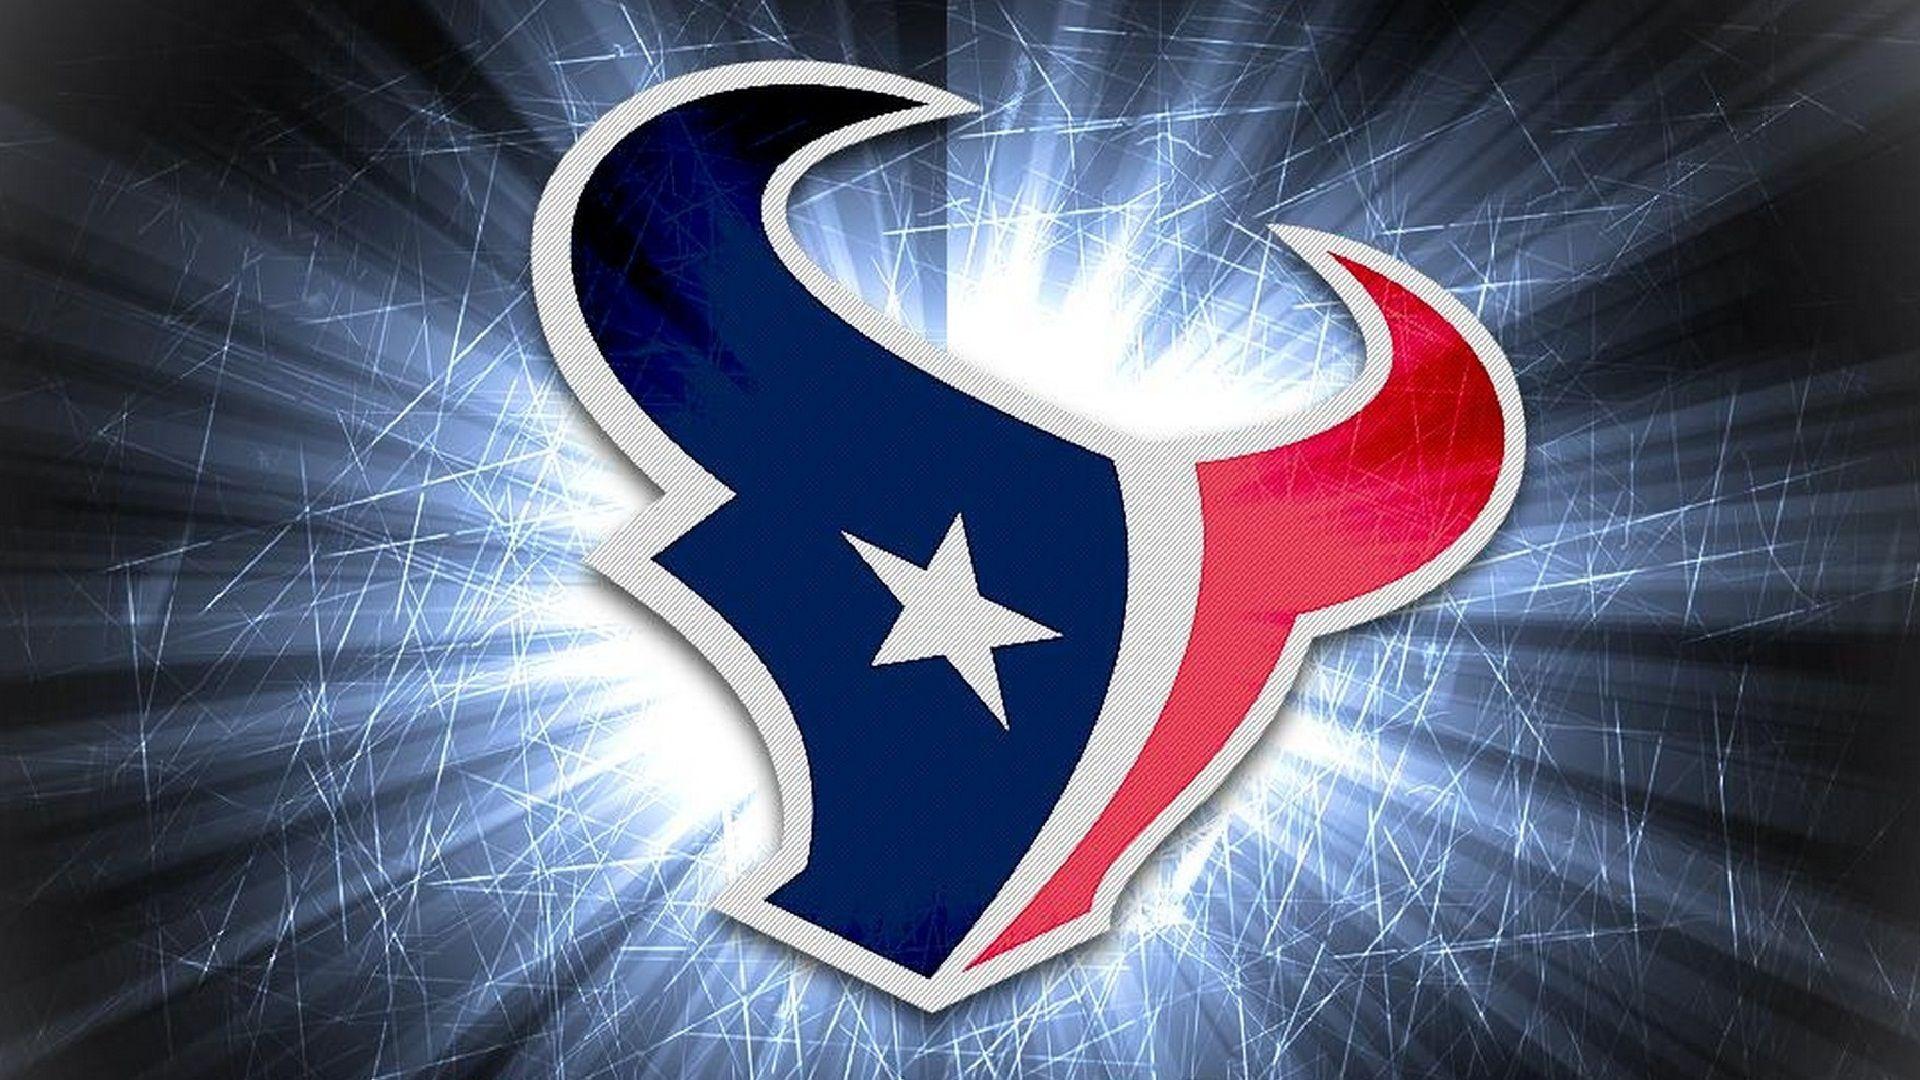 Houston Texans HD Wallpaper NFL Football Wallpaper. Houston texans, Texans, Football wallpaper